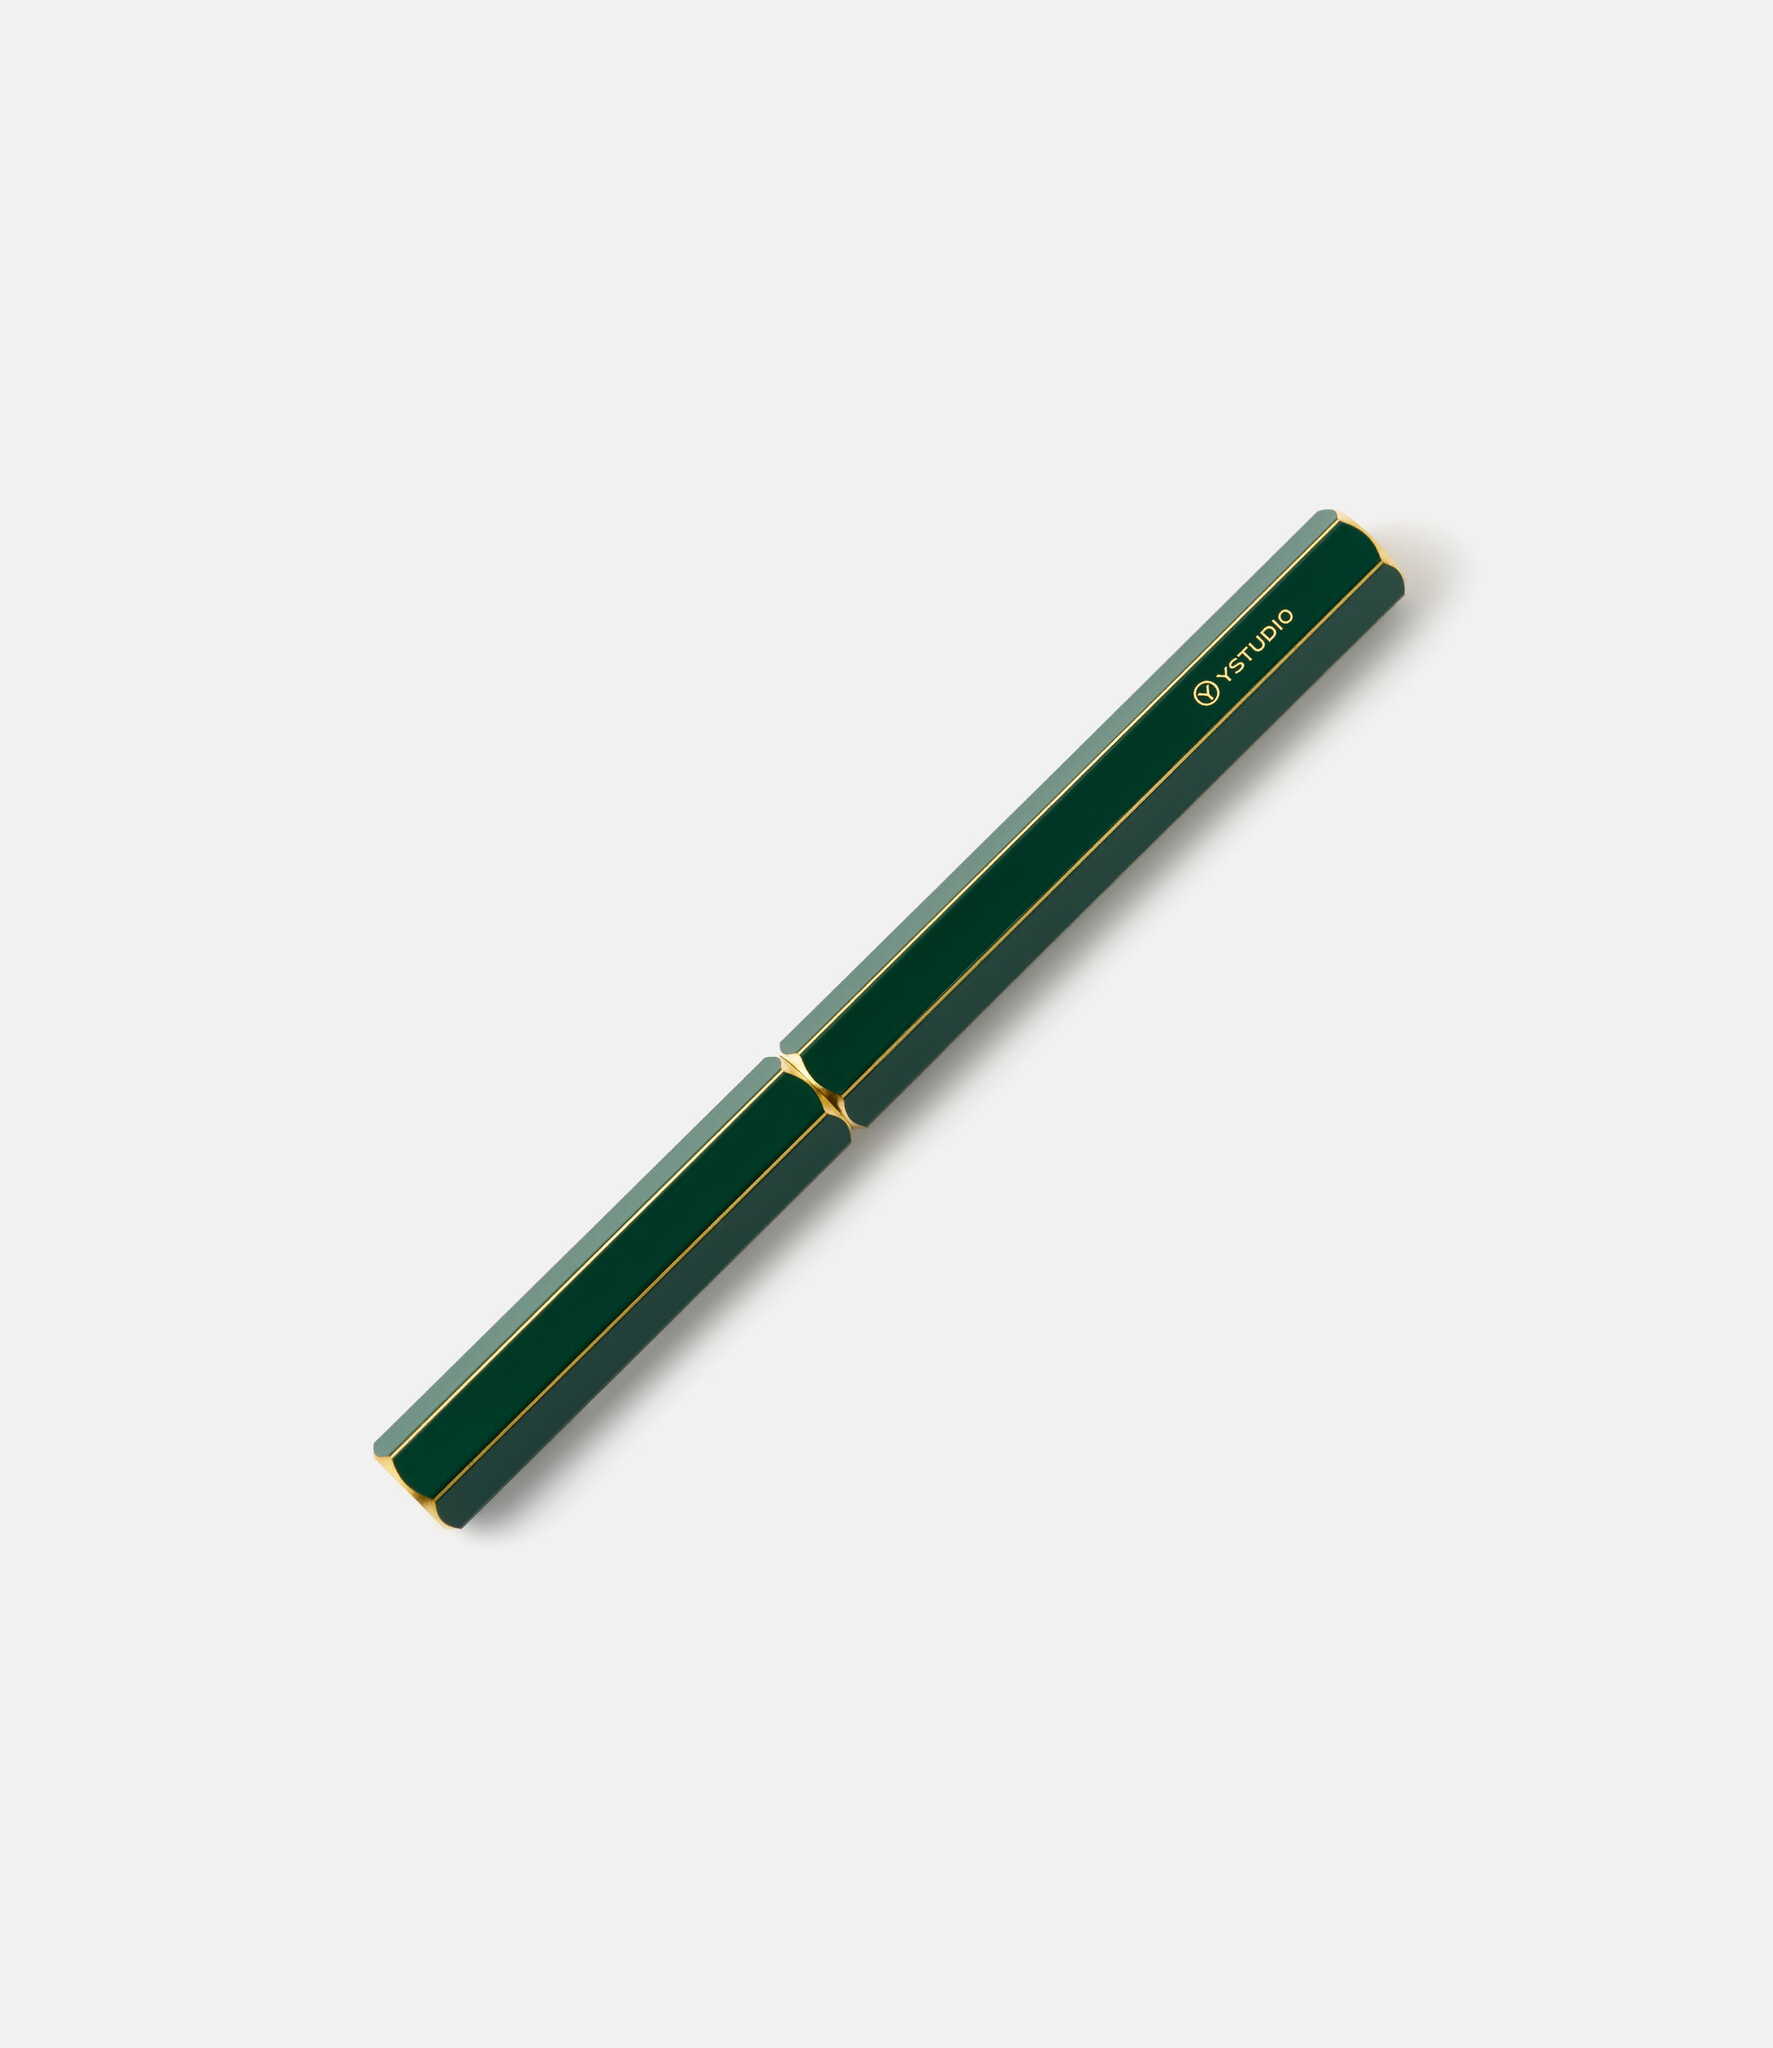 Ystudio Classic Revolve Fountain Pen Green — перьевая ручка из латуни